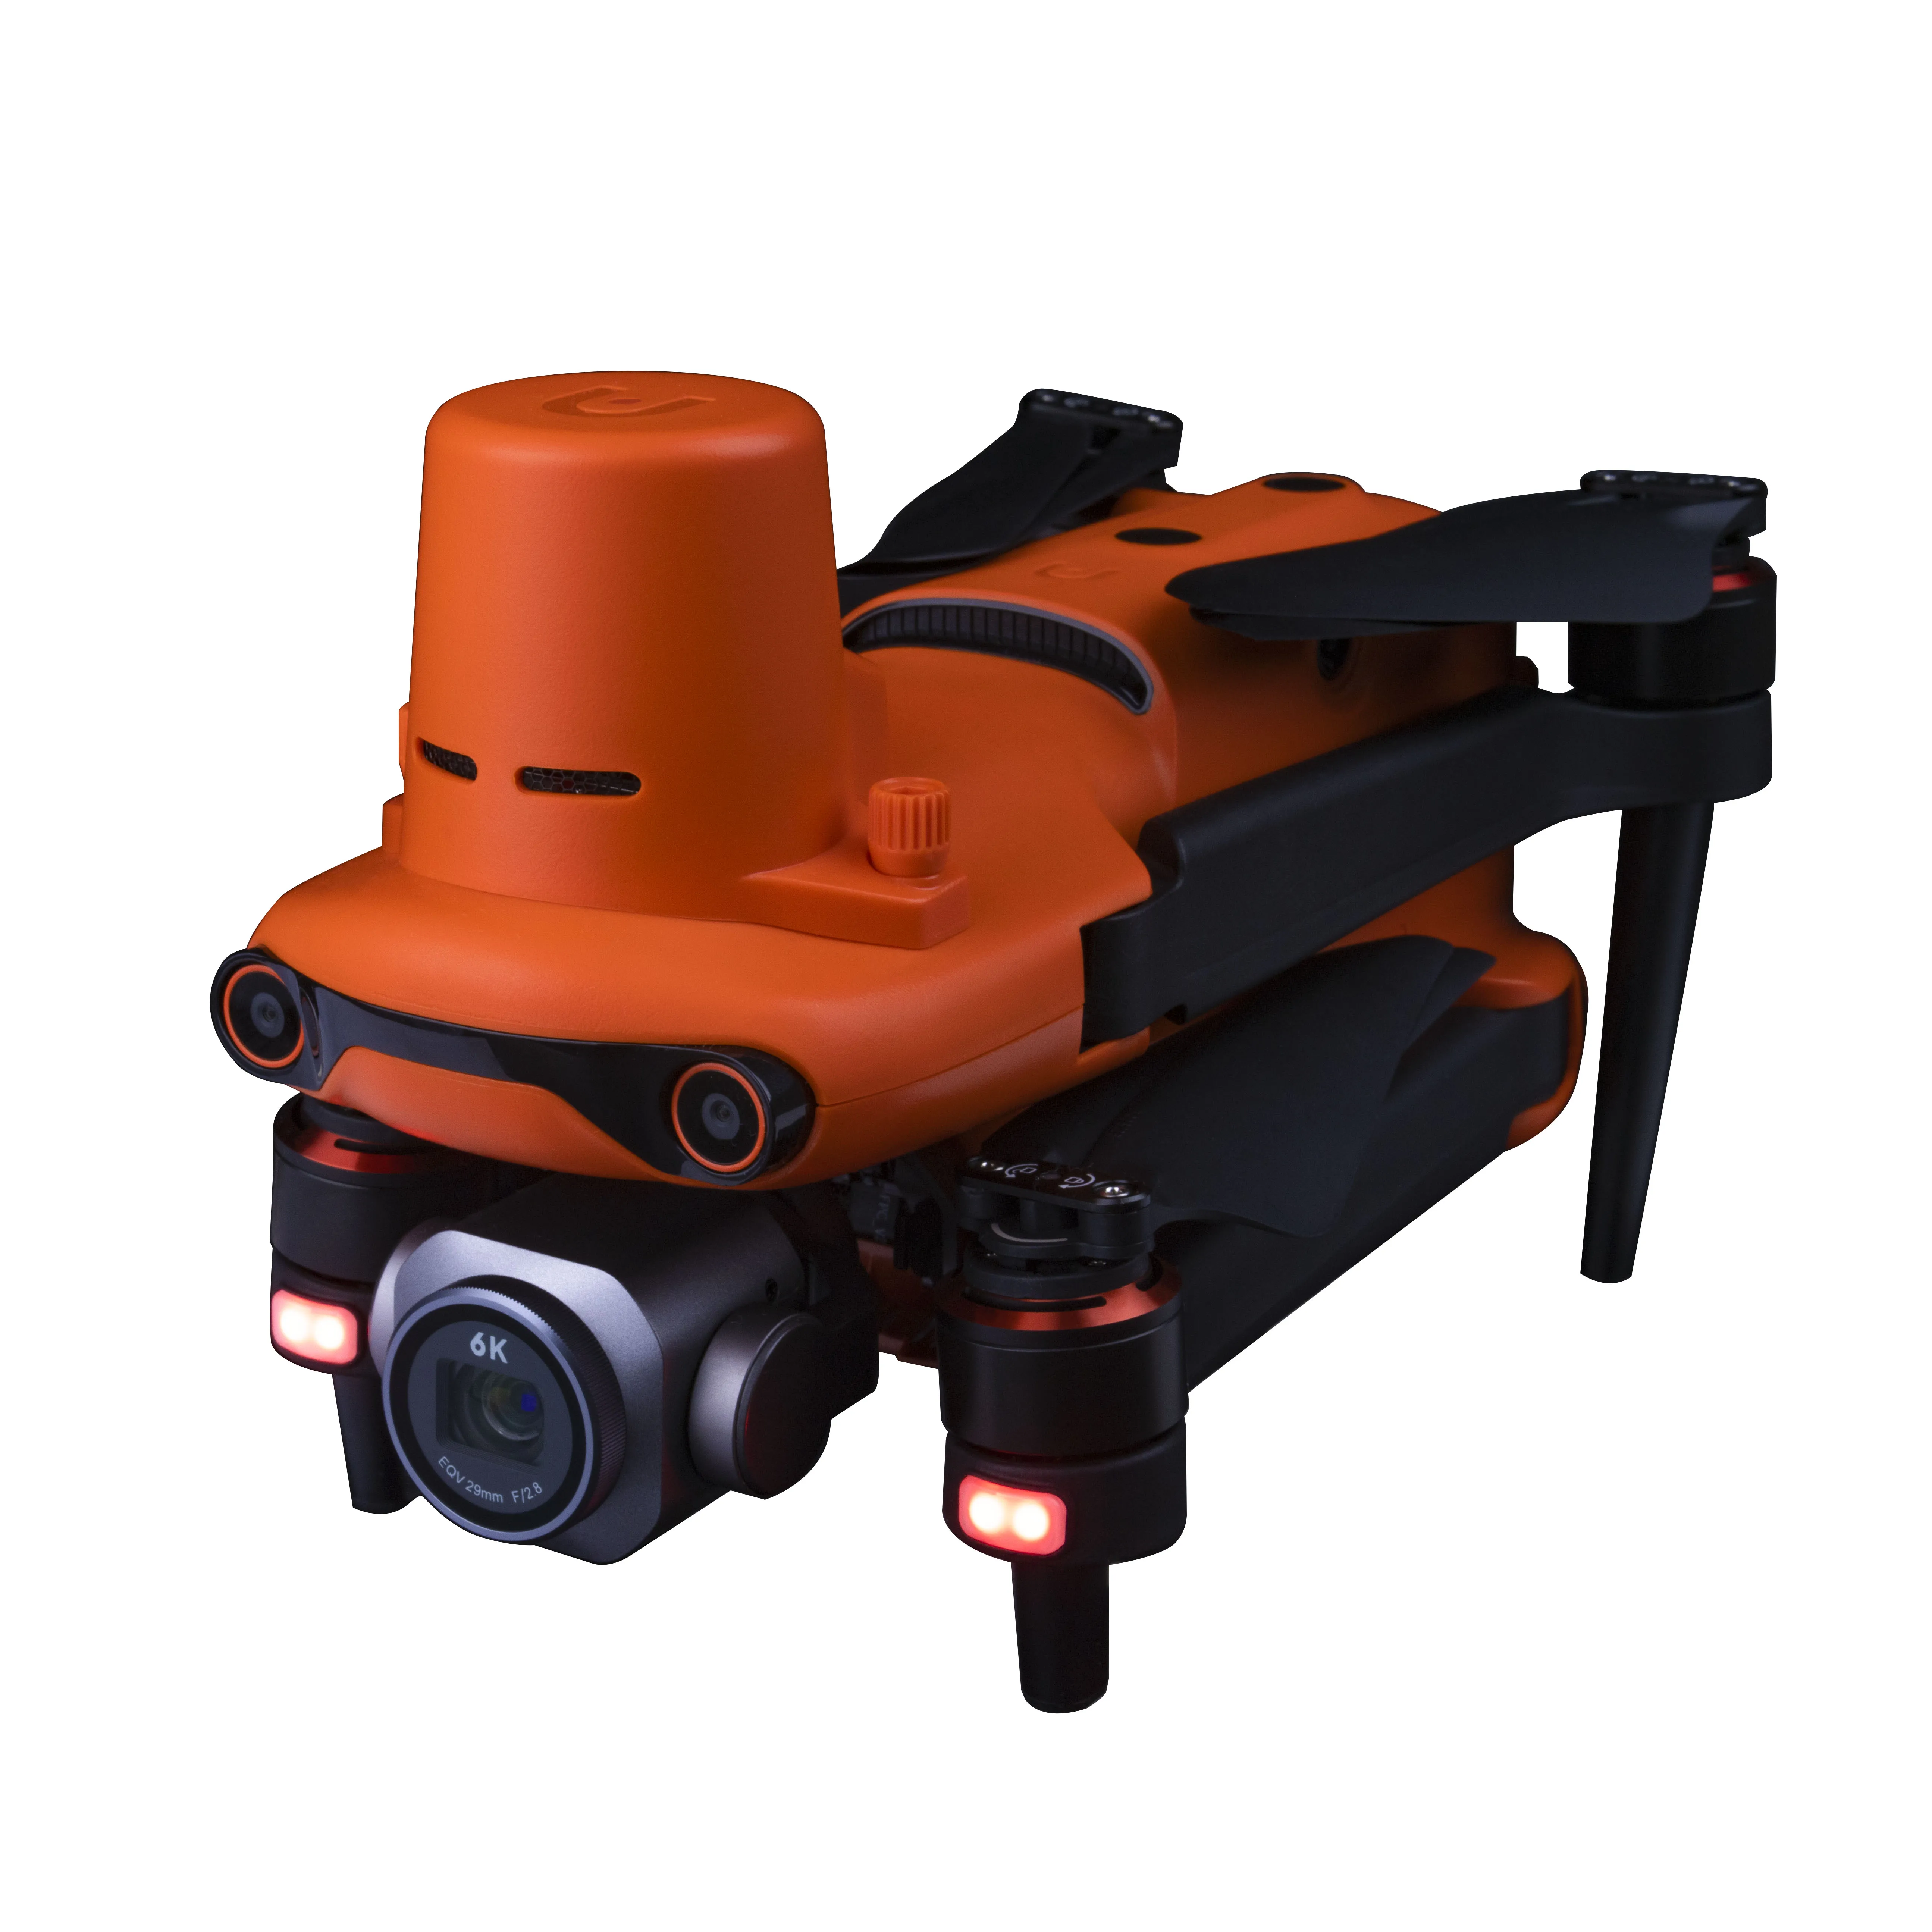 

Autel Robotics EVO 2 Pro RTK Surveying Fpv Drone Professionnel Rc Long Range Mapping Uav With Gps 6k Camera, Orange